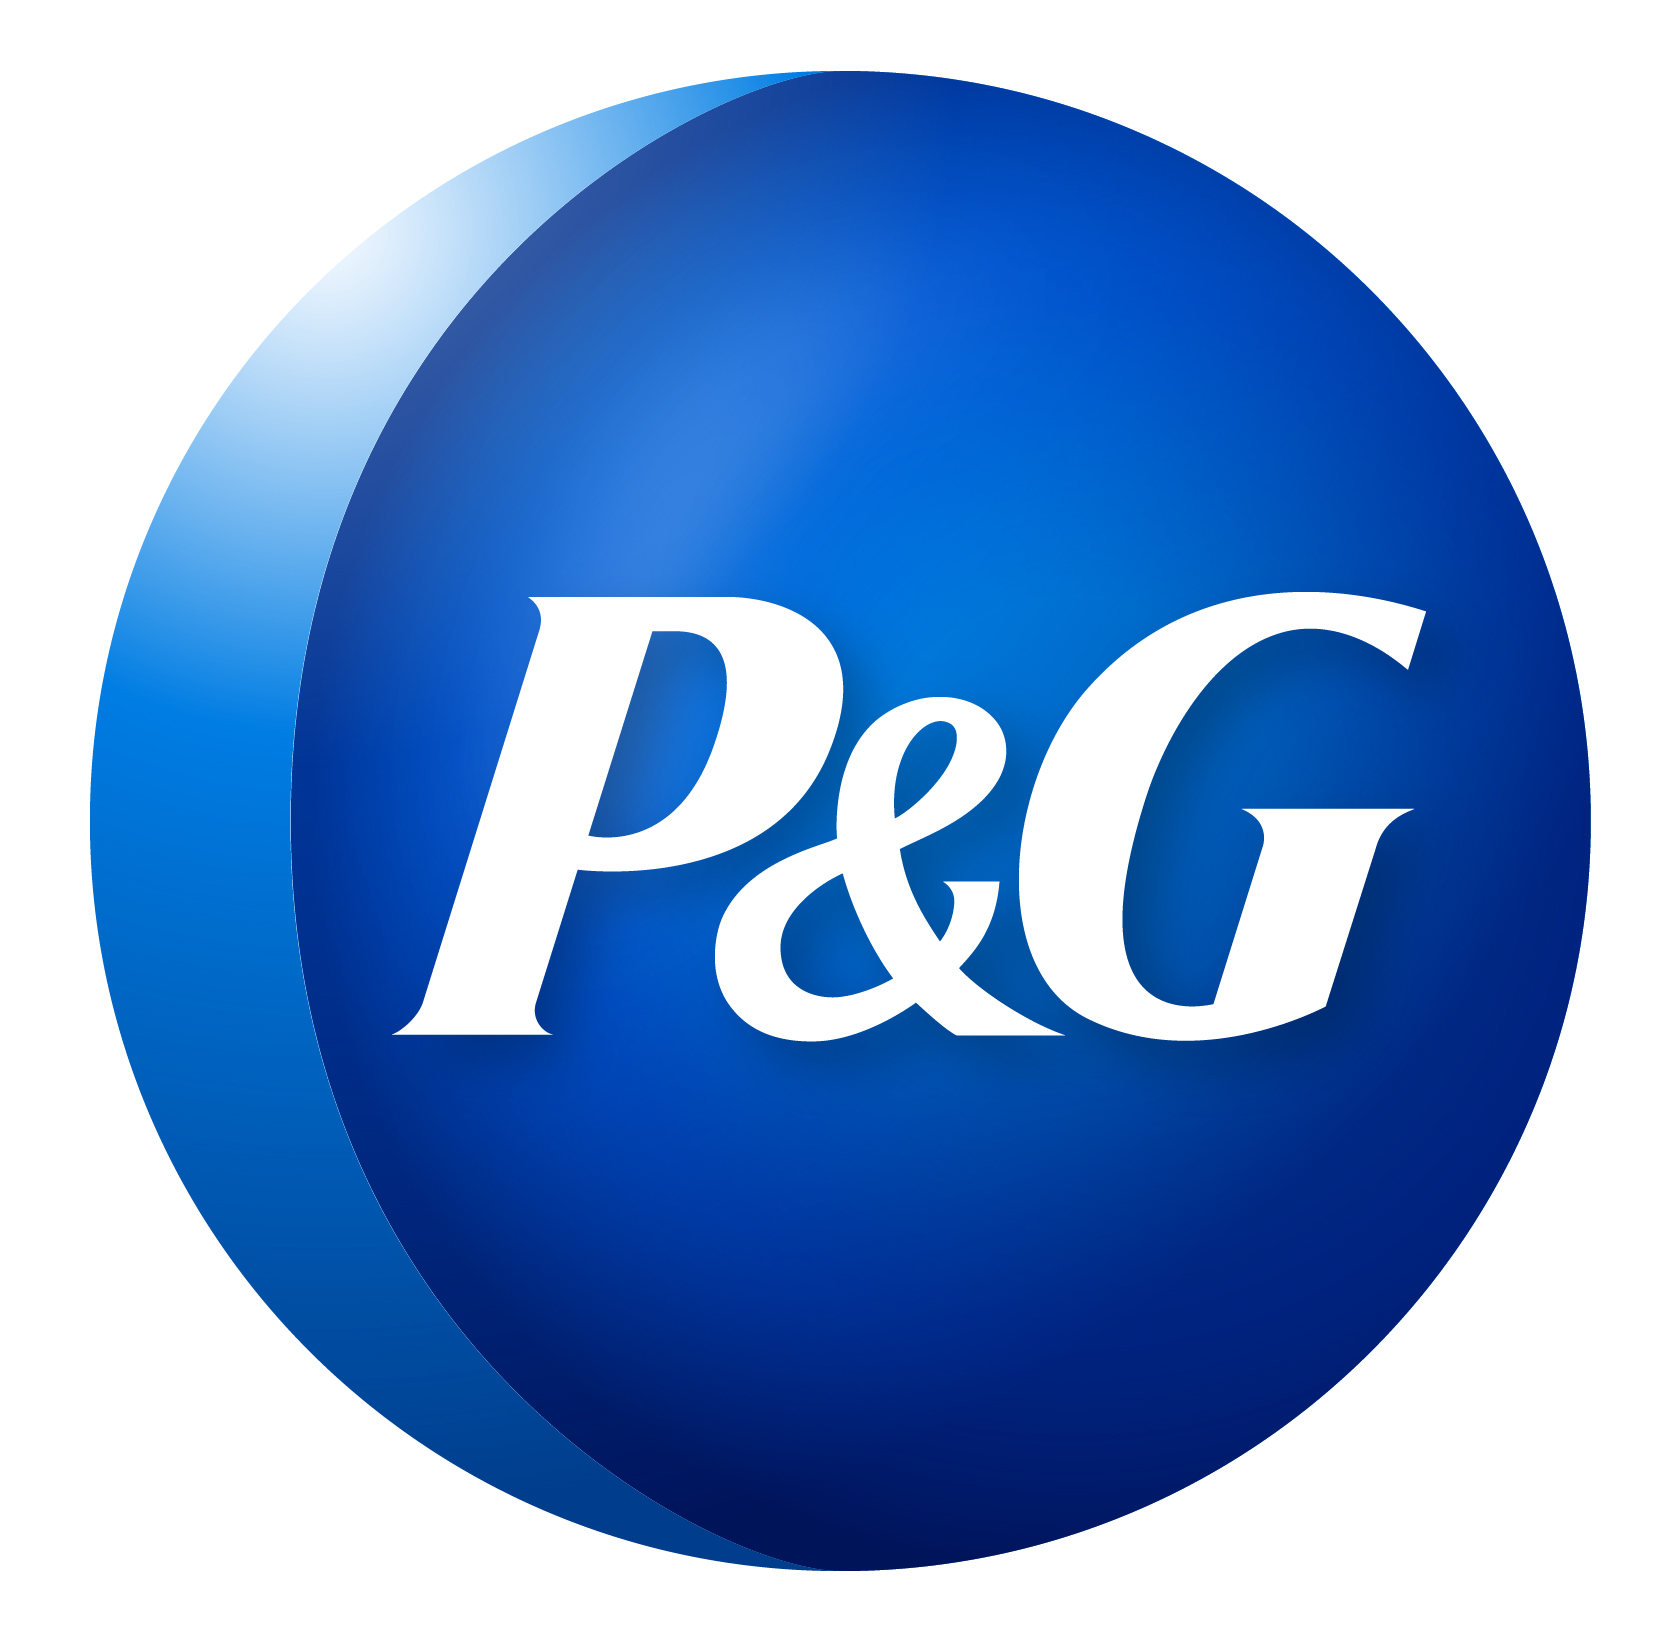 Logo Procter & Gamble Service GmbH